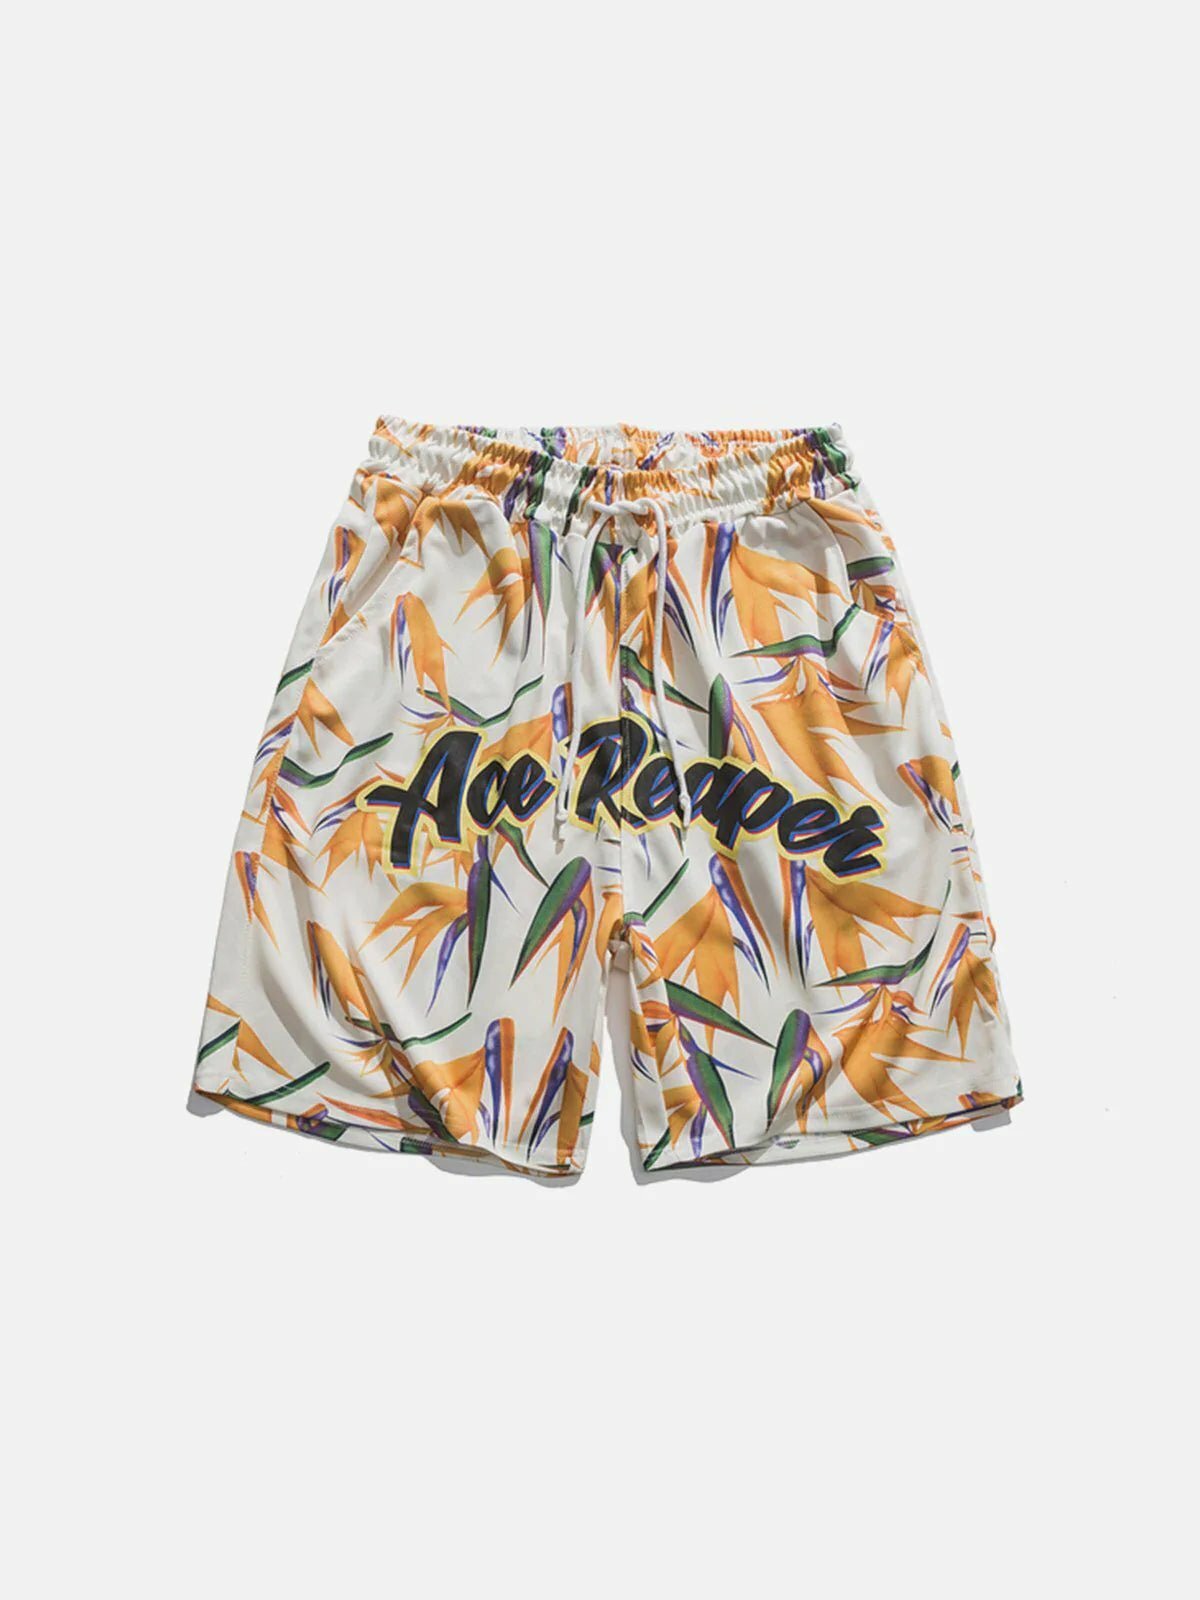 vibrant leaf print shorts youthful  retro beachwear 6319